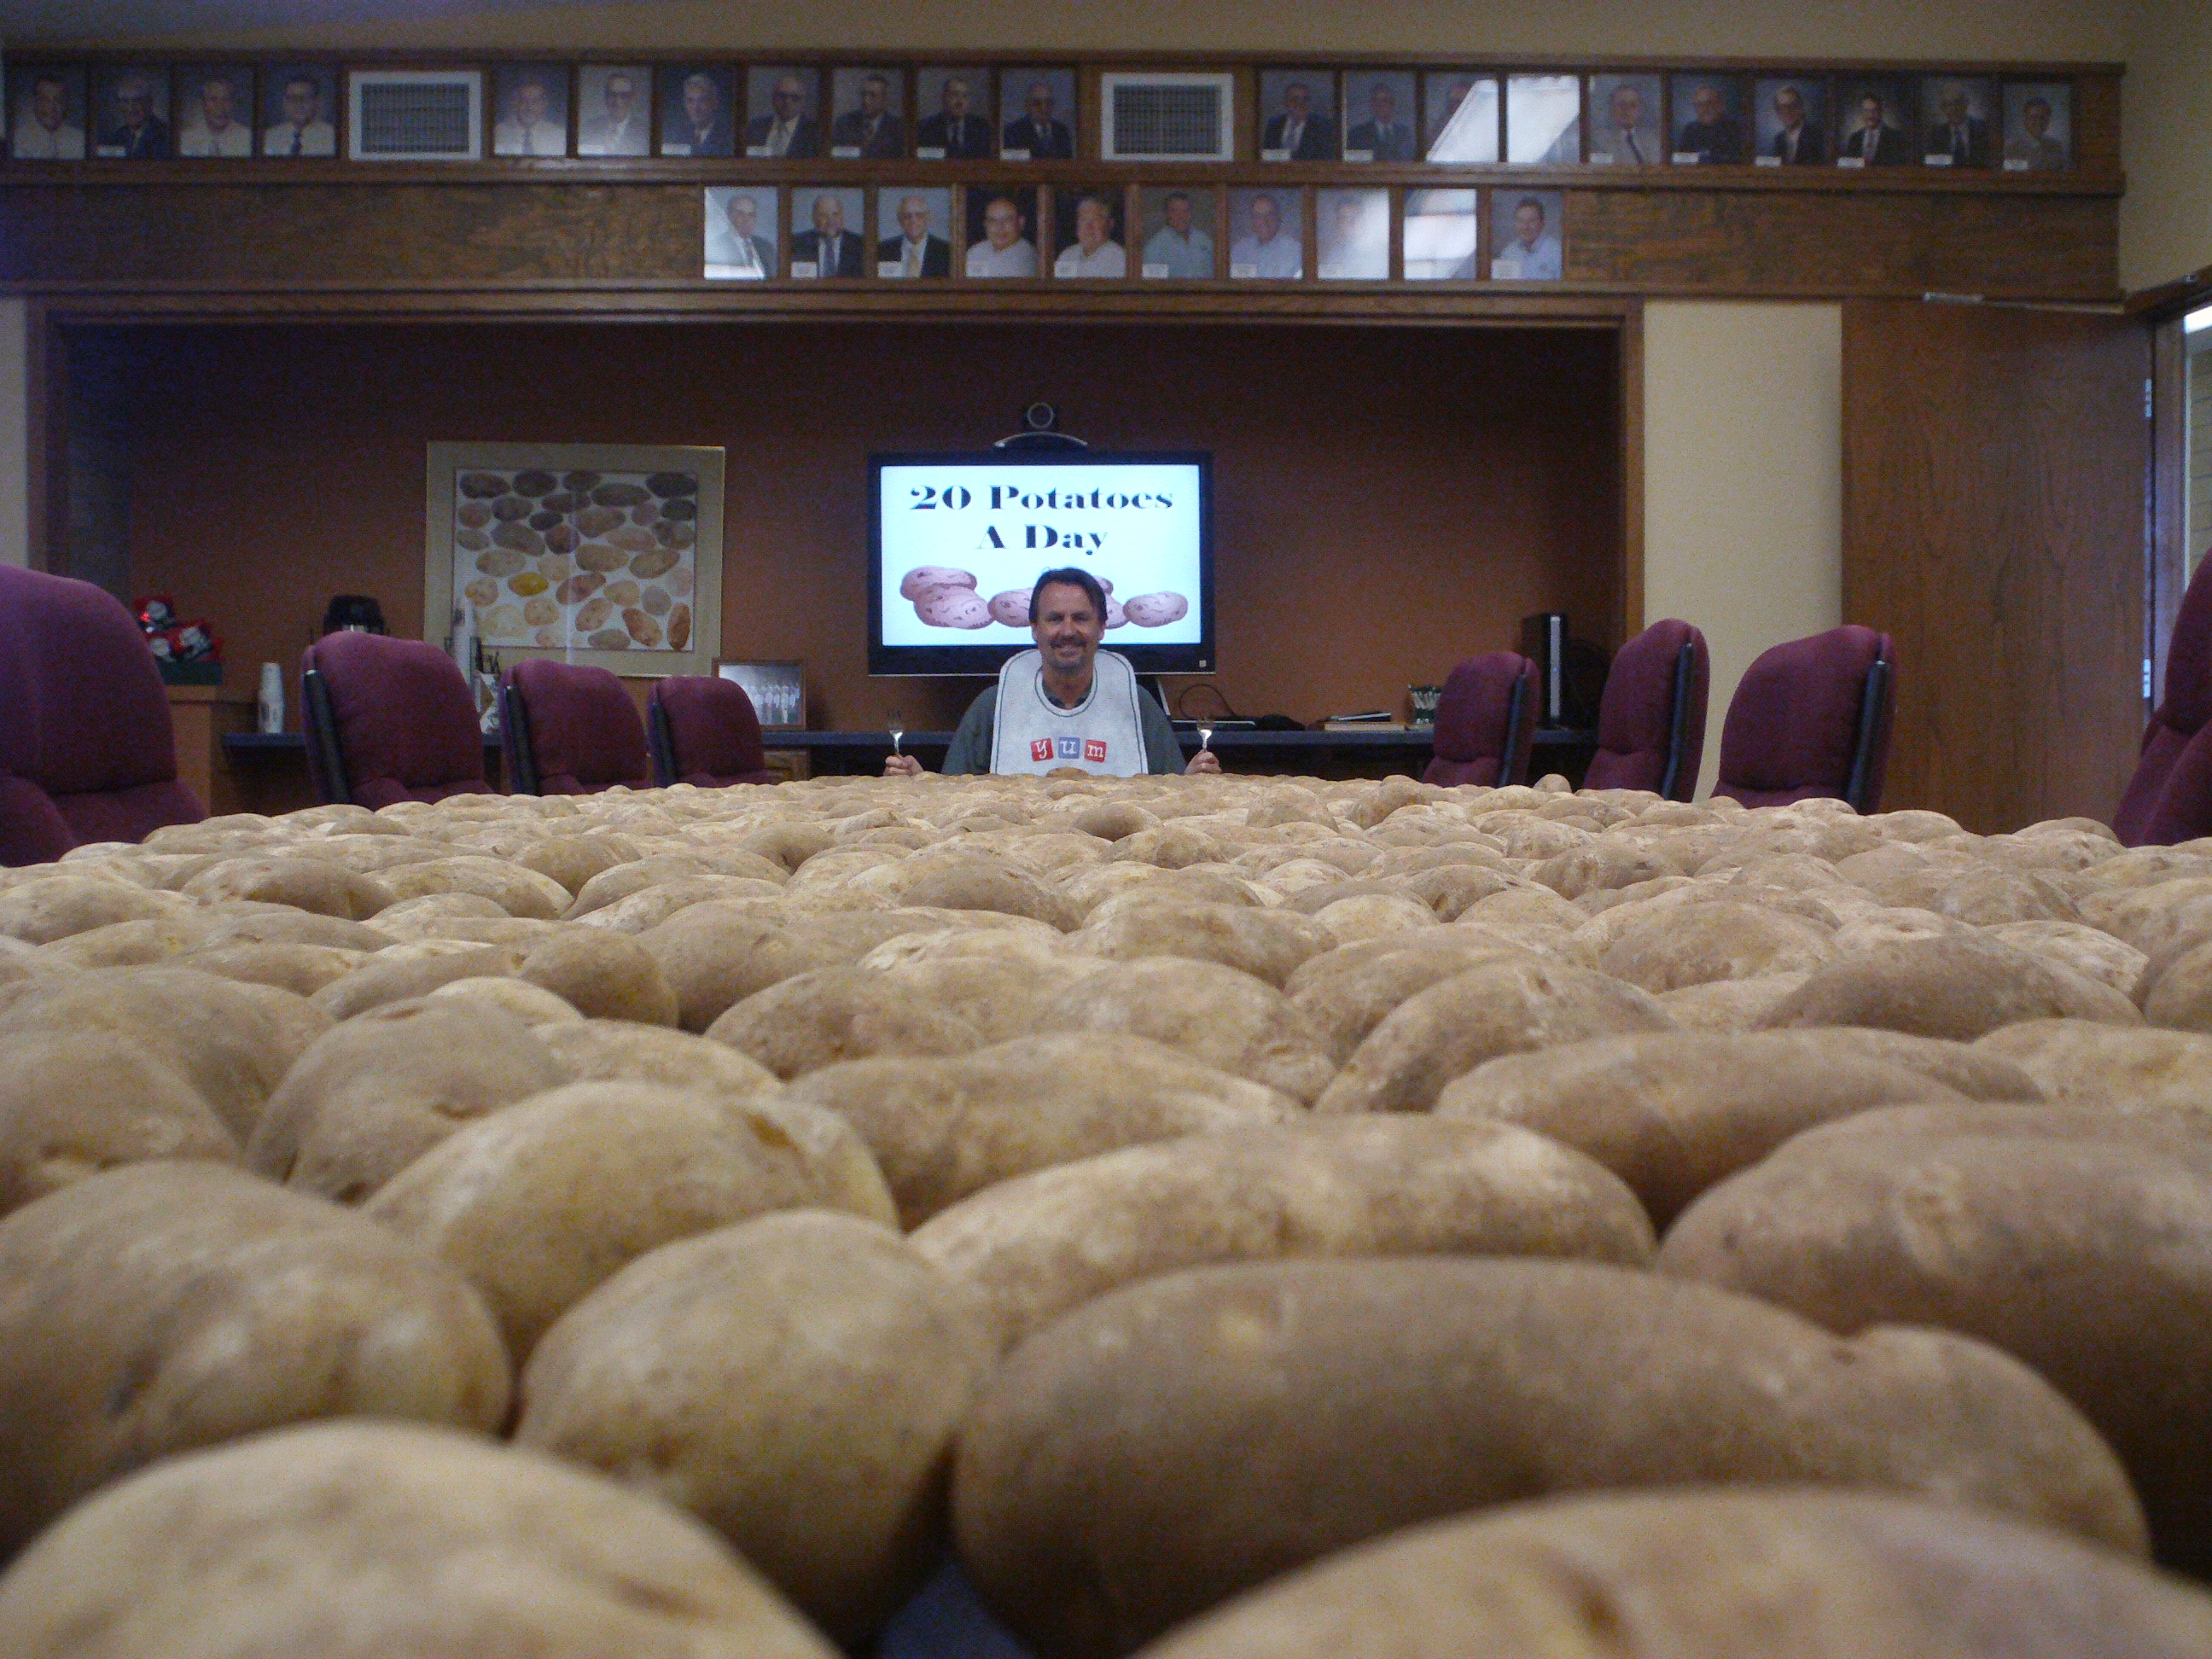 All-potato diet: 8 years later - Spudman